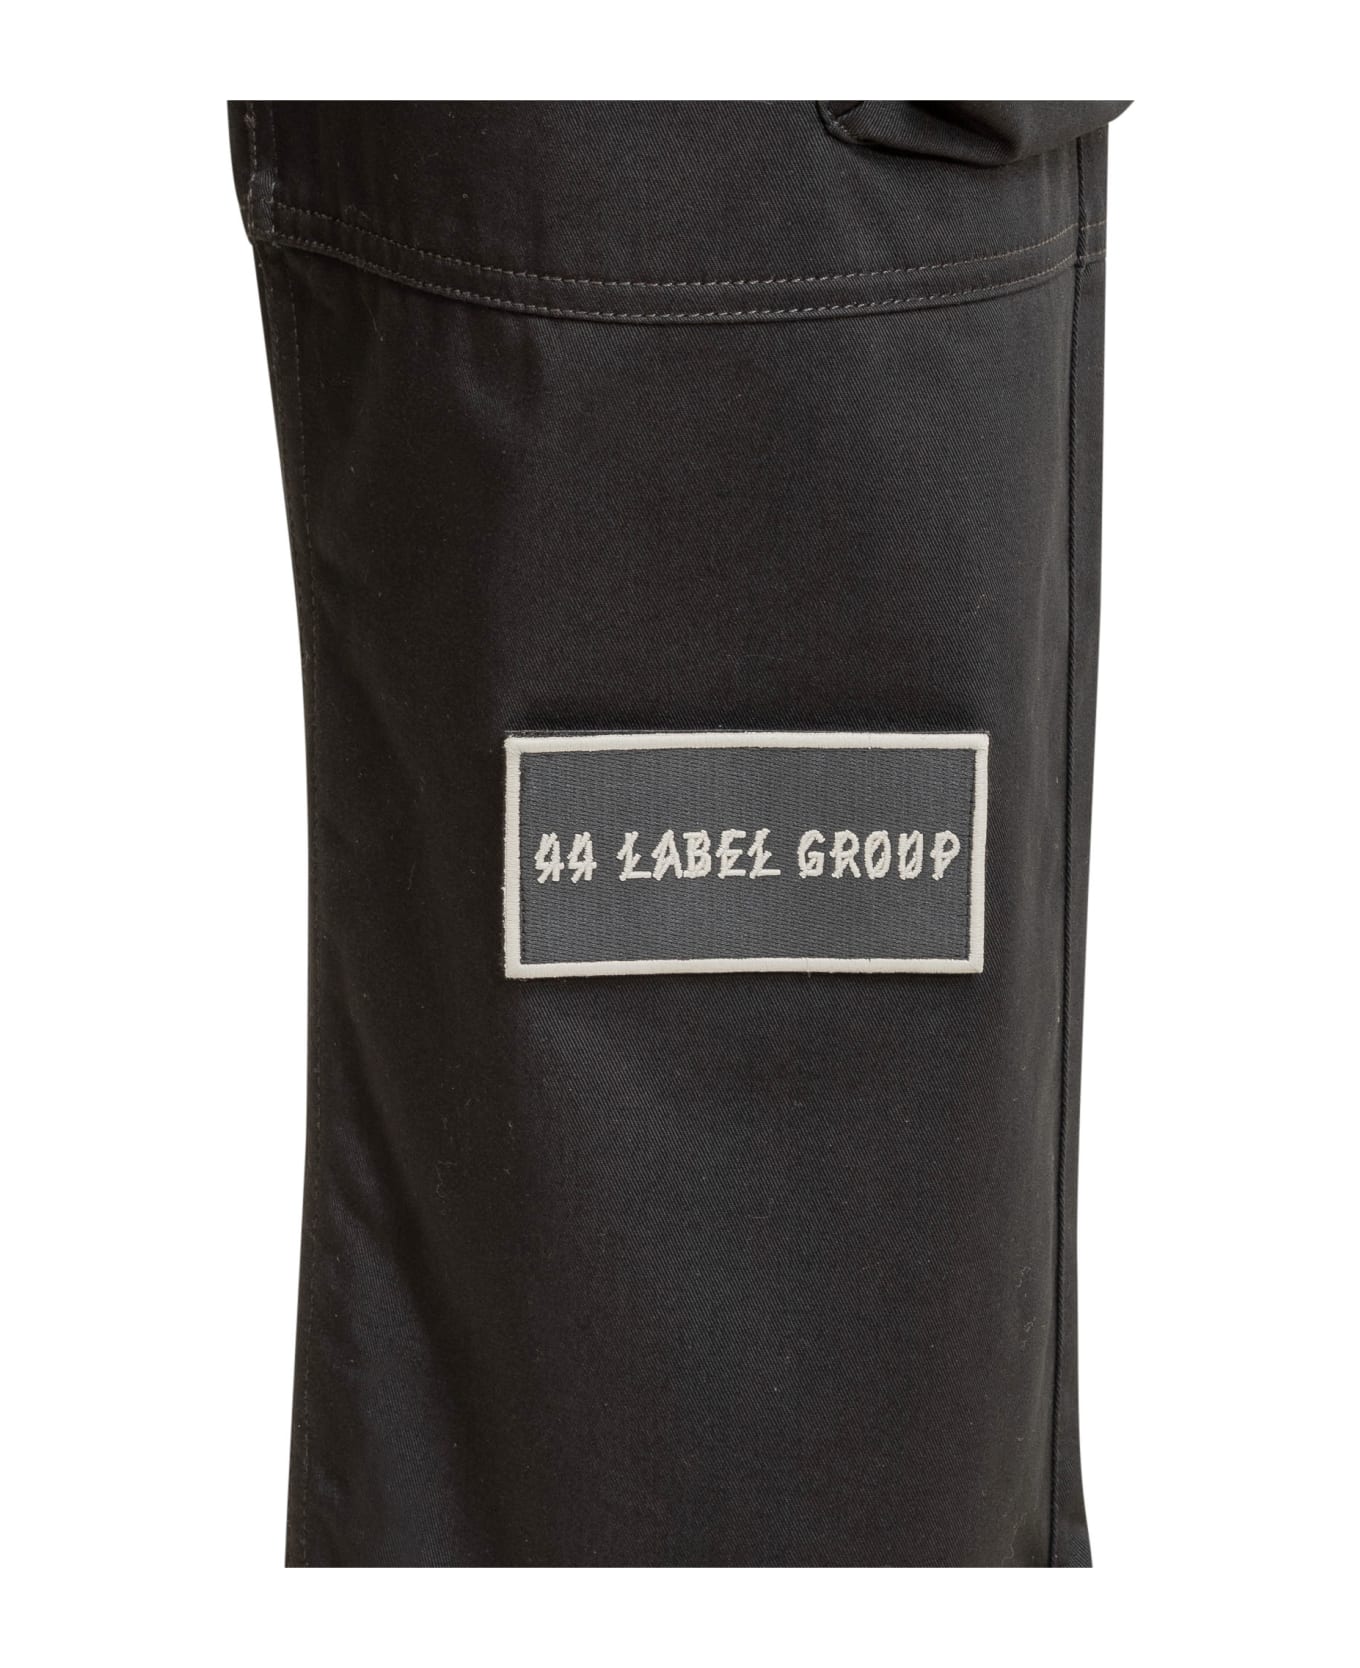 44 Label Group Cargo Pants Pants - BLACK ボトムス